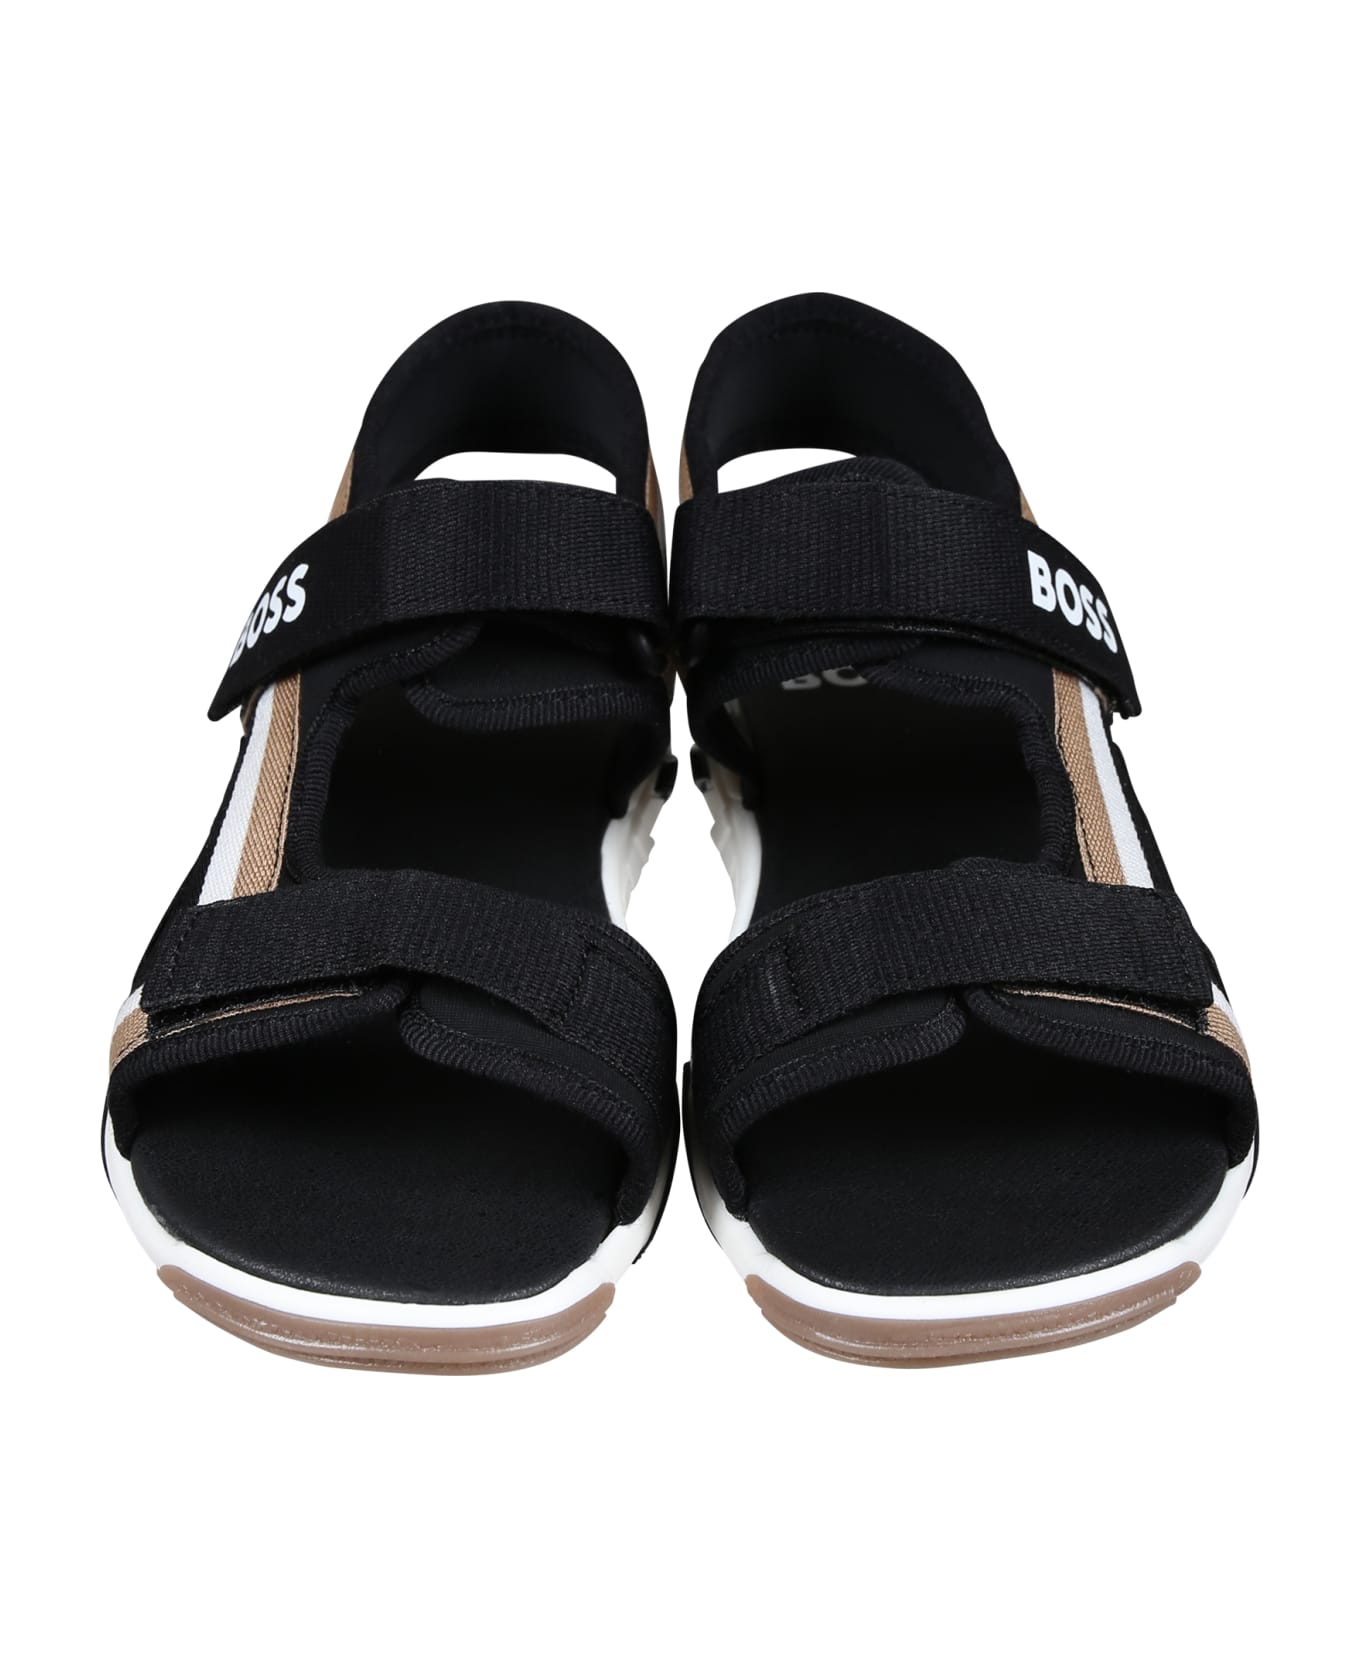 Hugo Boss Blaxk Sandals For Boy With Logo - Black